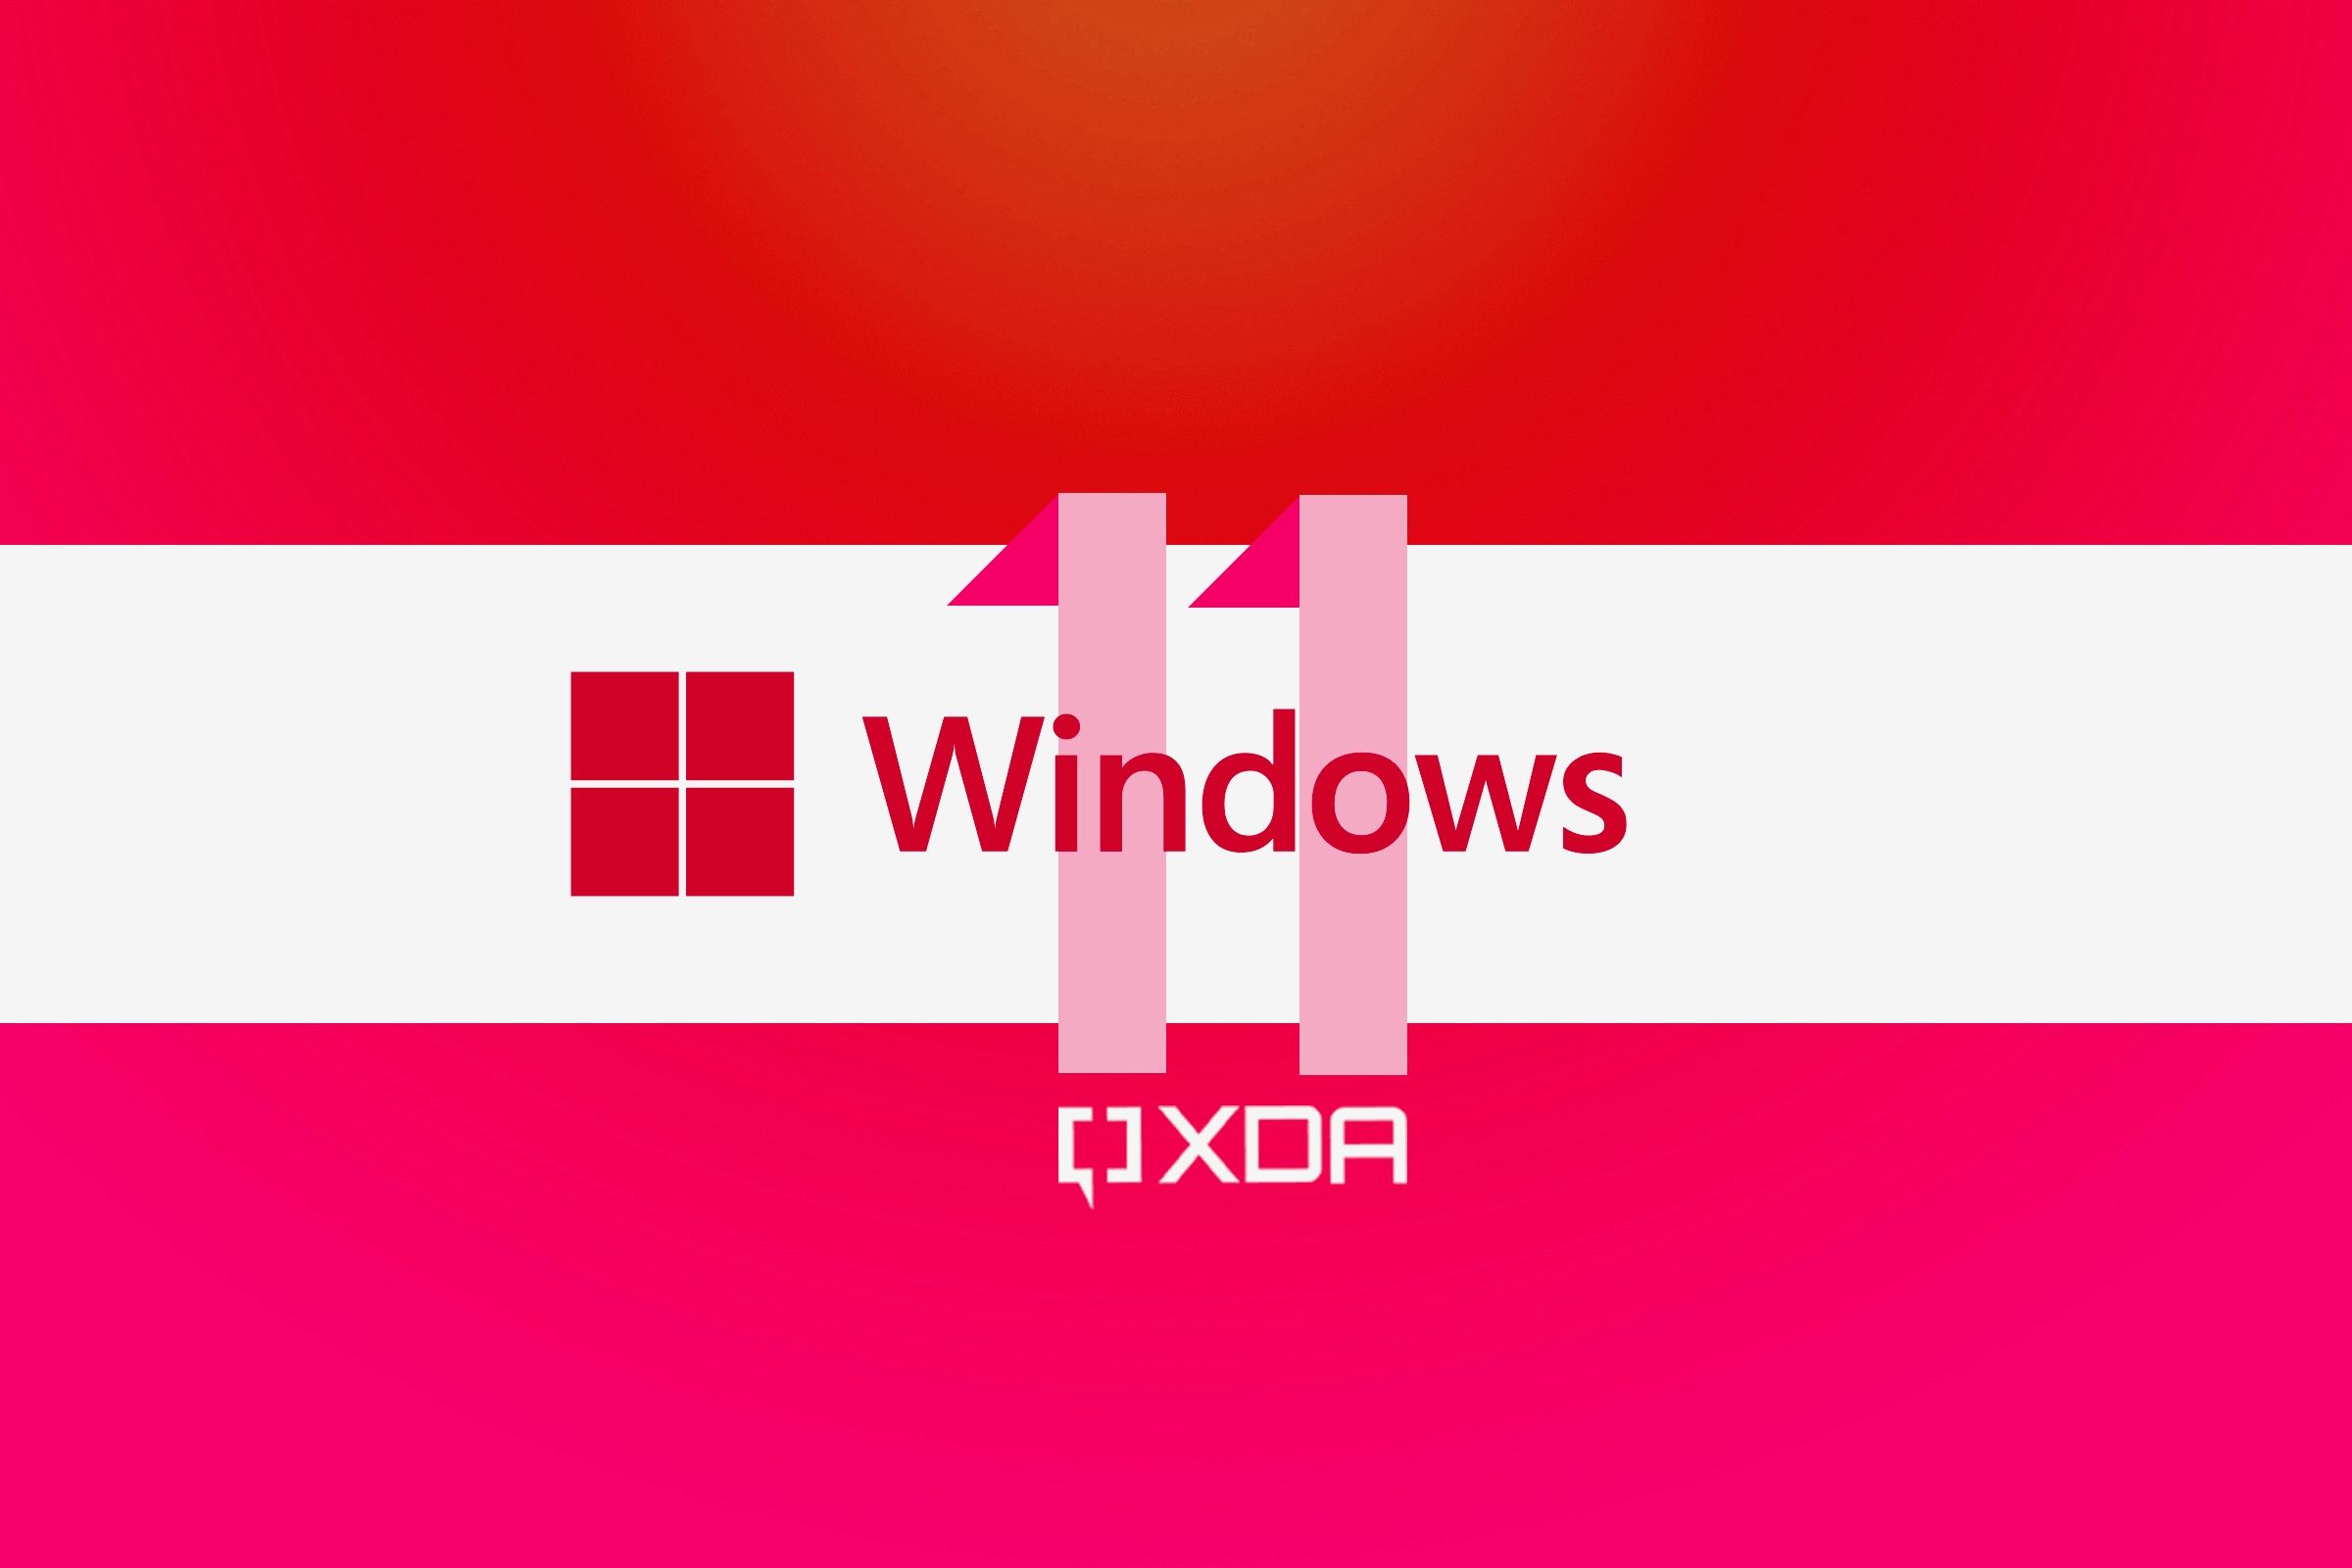 Логотип Windows красного цвета над цифрой 11 розового цвета с белым баннером за текстом. Над и под белым баннером виден красно-розовый градиент.